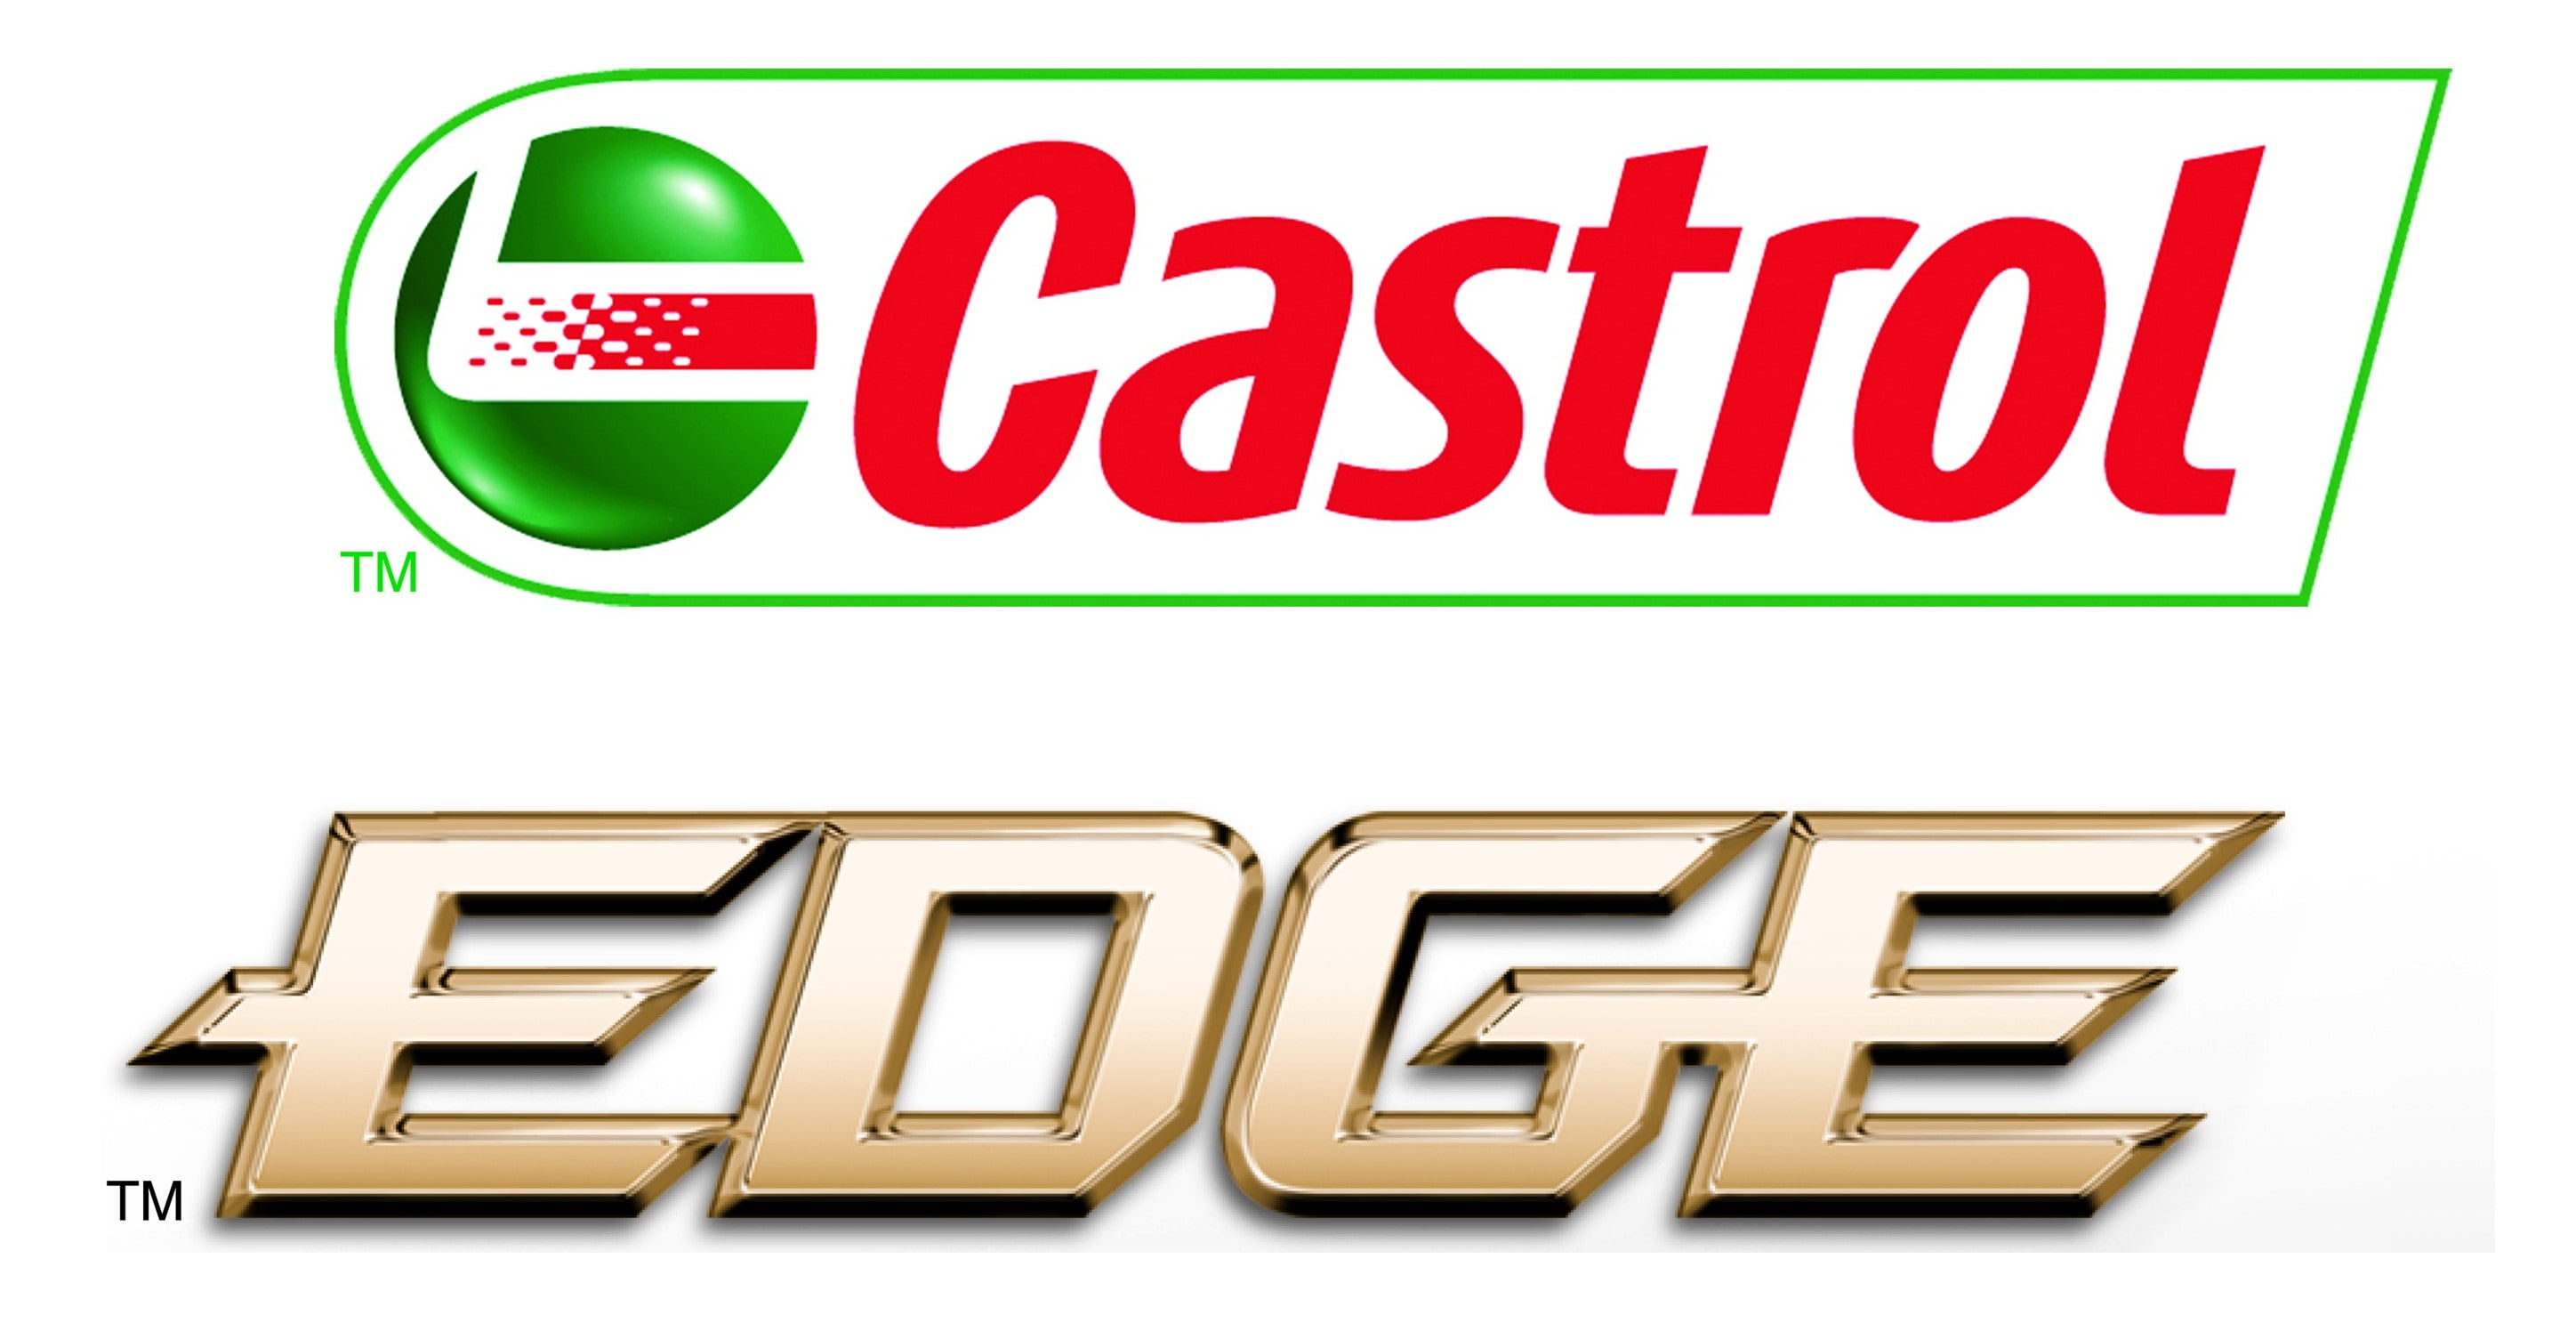 castrol-edge-logo.jpg